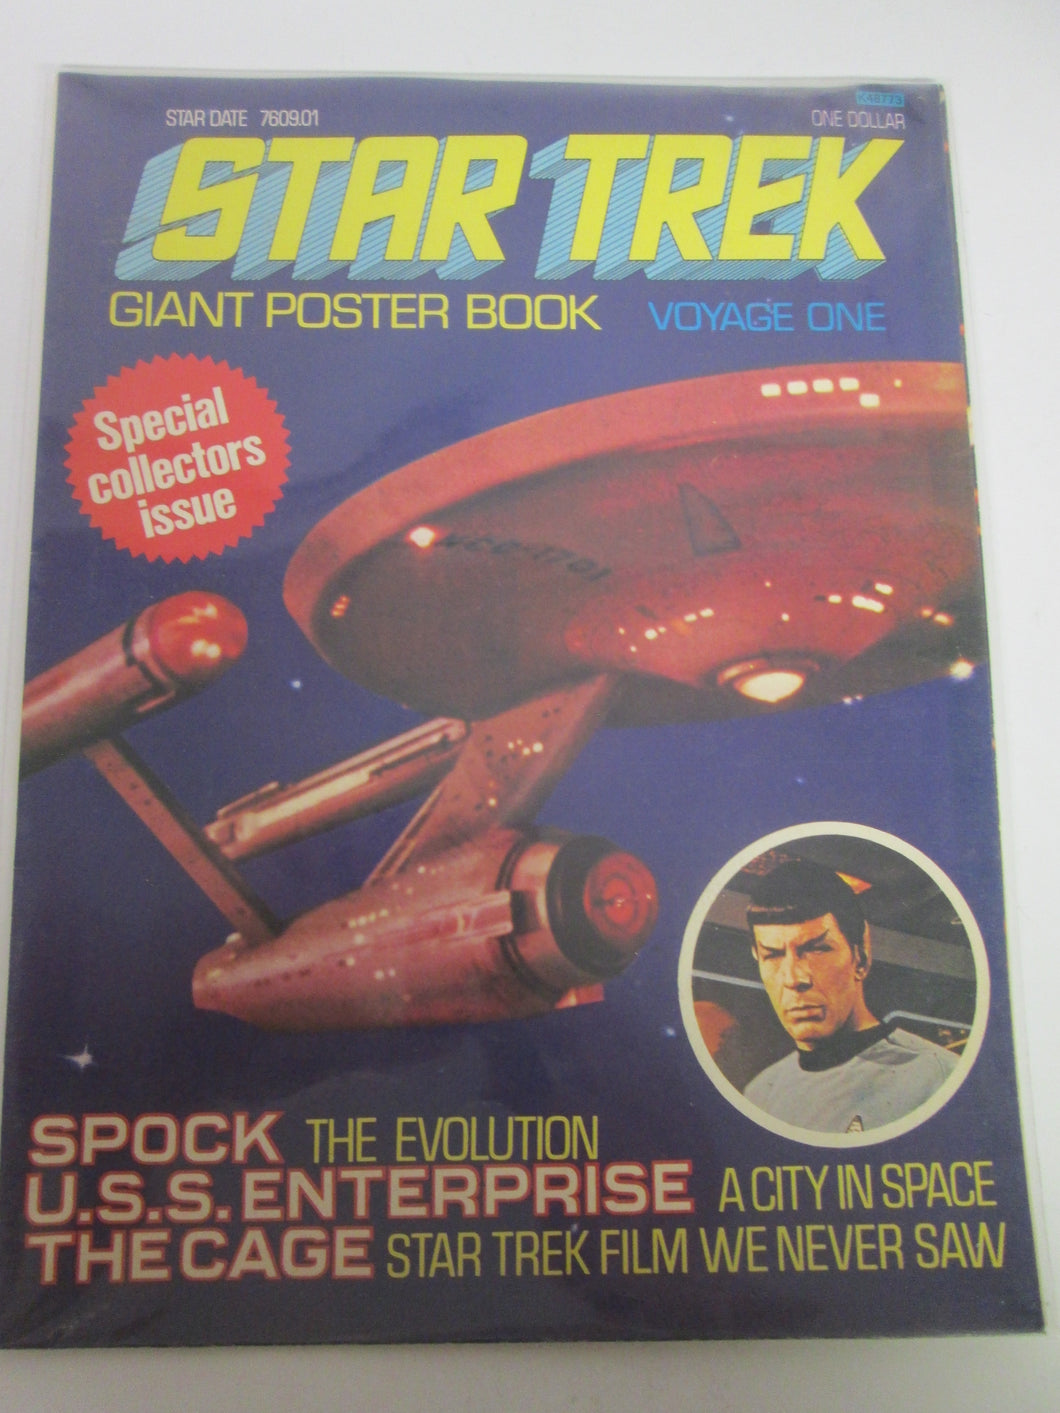 Star Trek Giant Poster Book Voyage One Stardate 7601.01 RARE PB